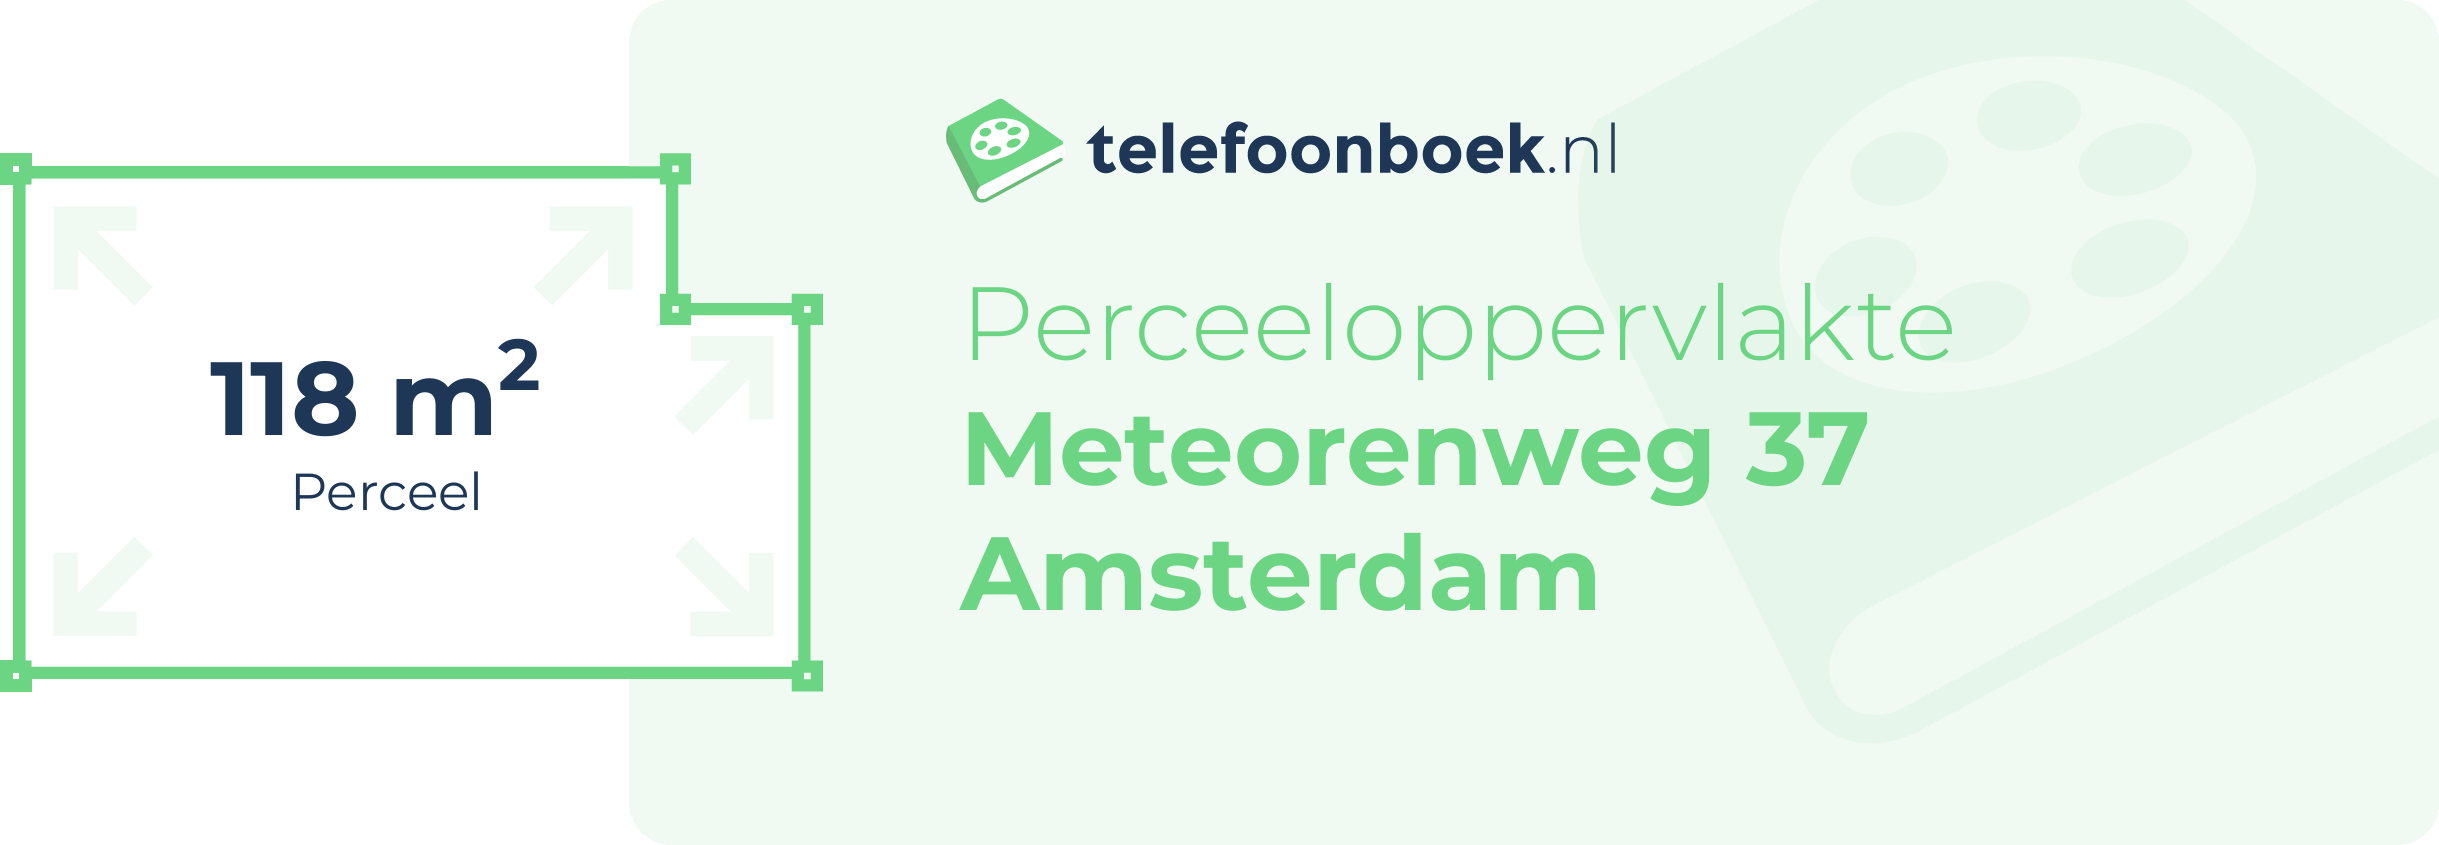 Perceeloppervlakte Meteorenweg 37 Amsterdam